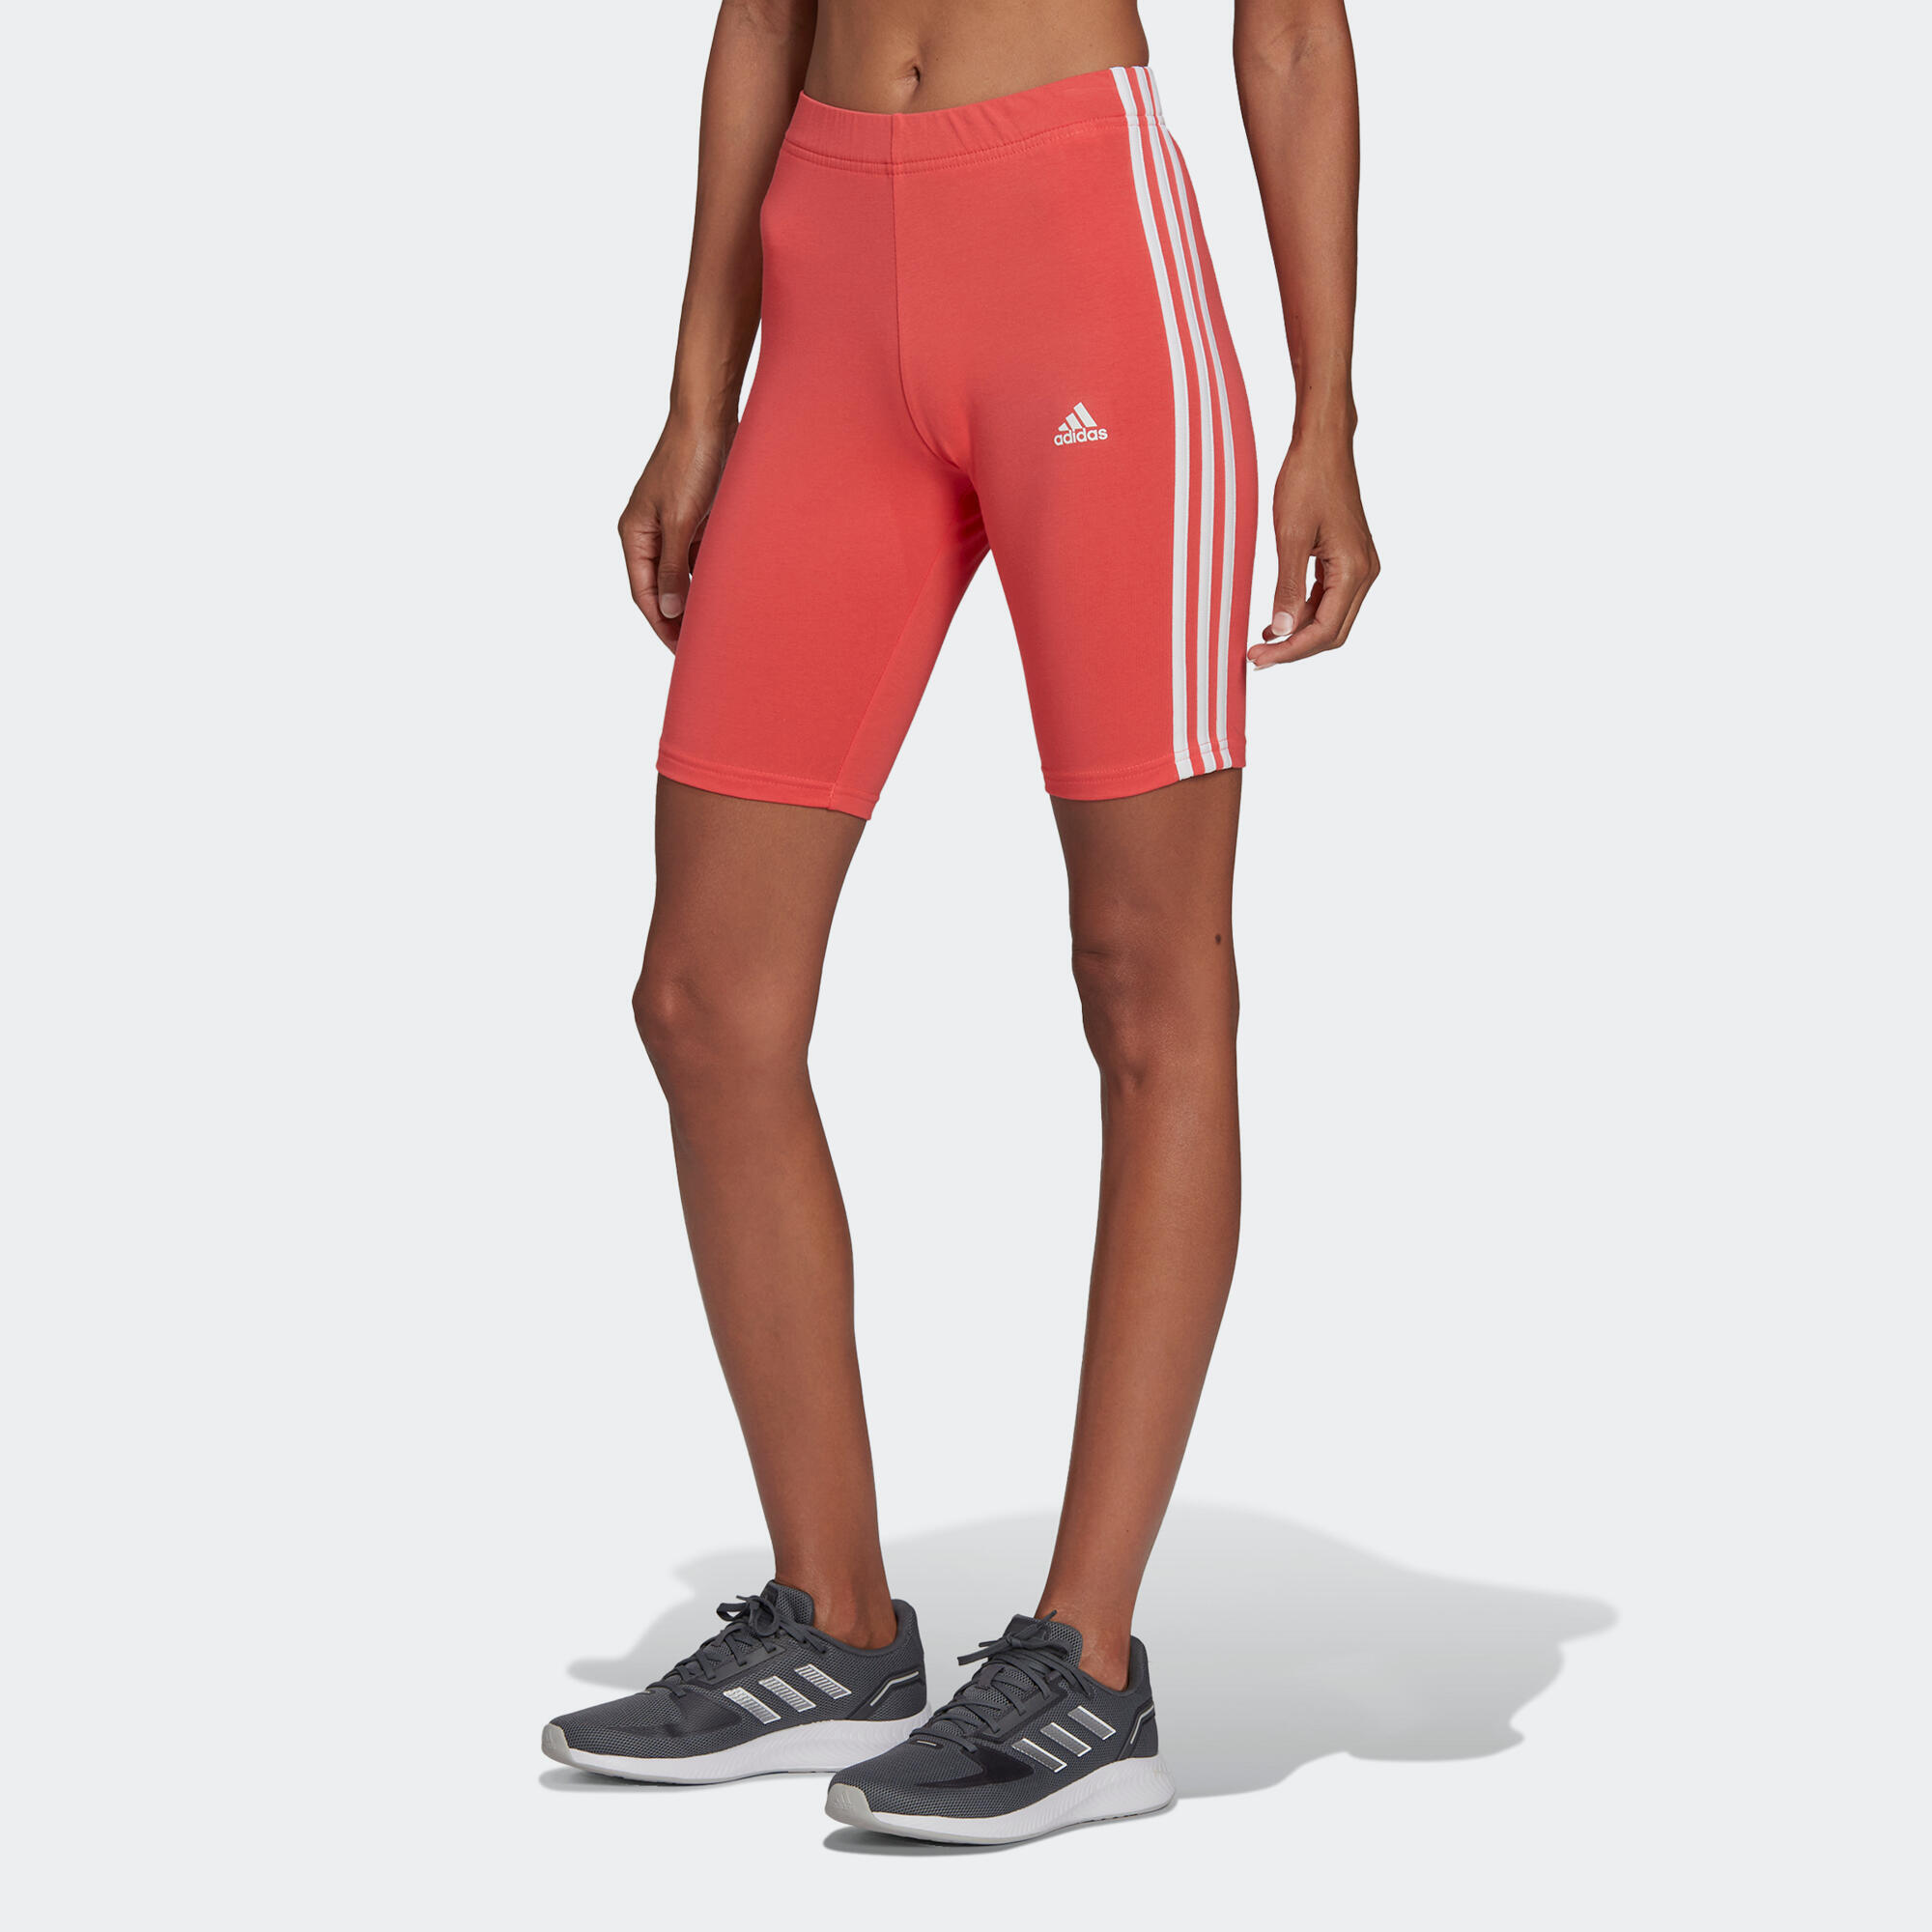 Шорты фитнес Adidas женские коралловые